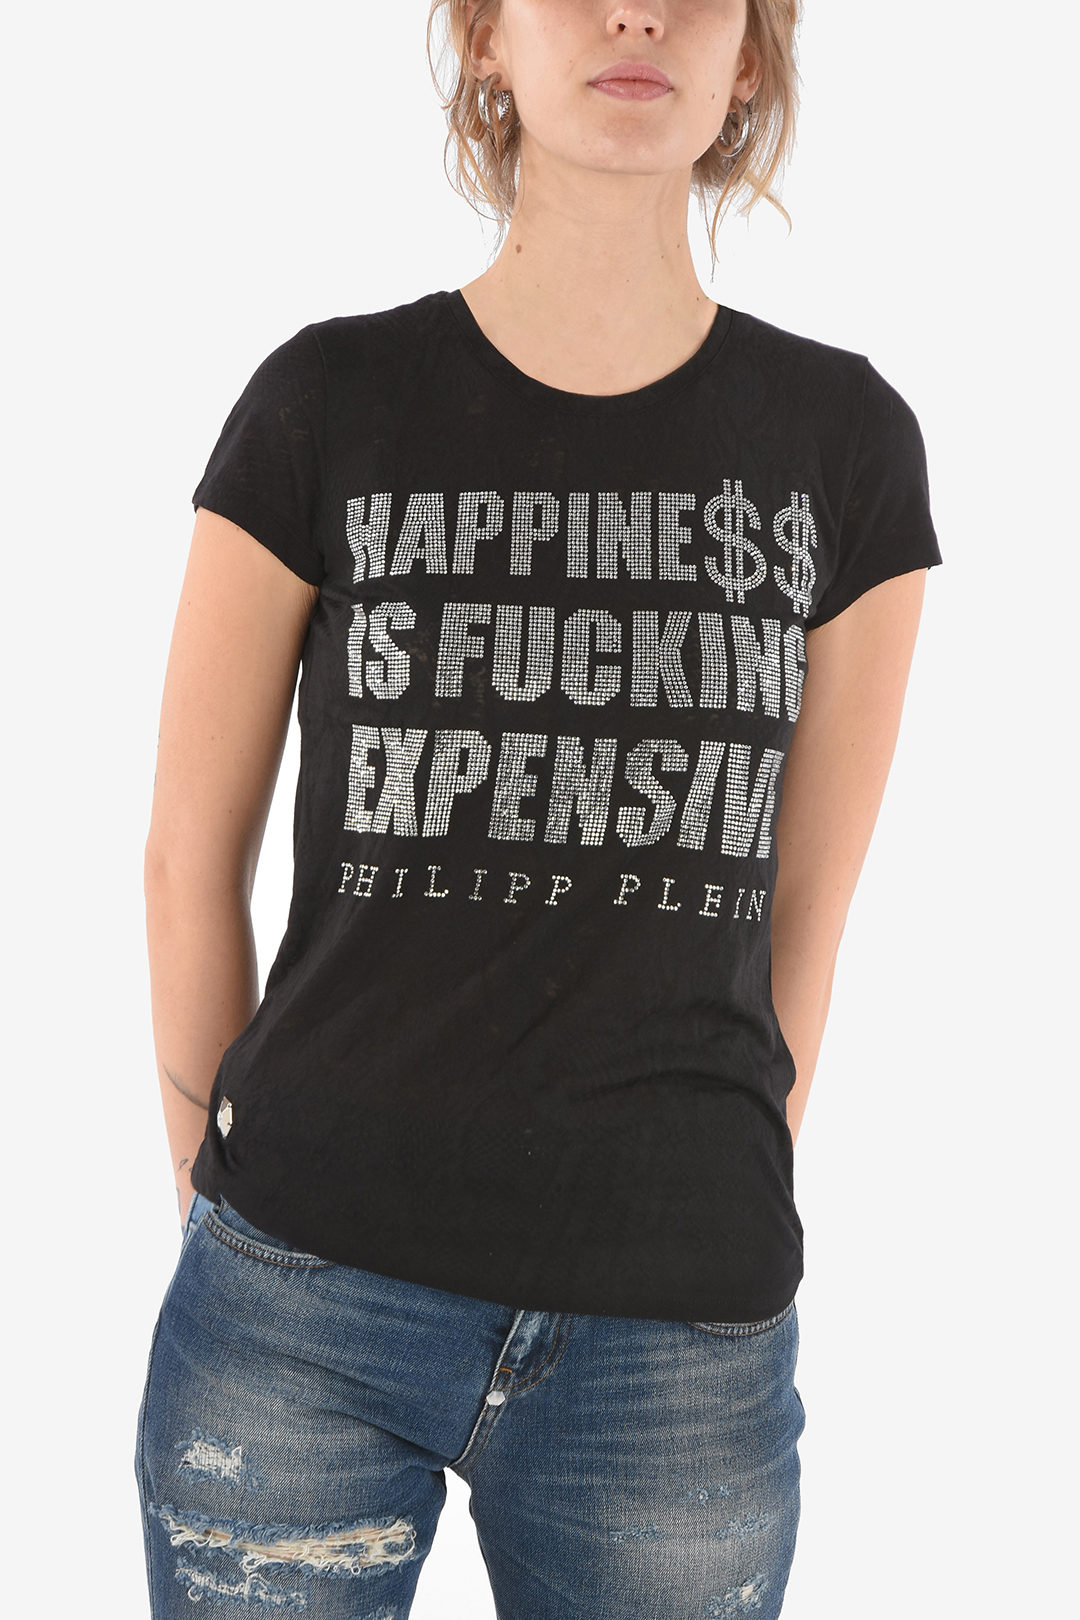 Philipp Cotton HAPPINE$$ T-Shirt women - Glamood Outlet